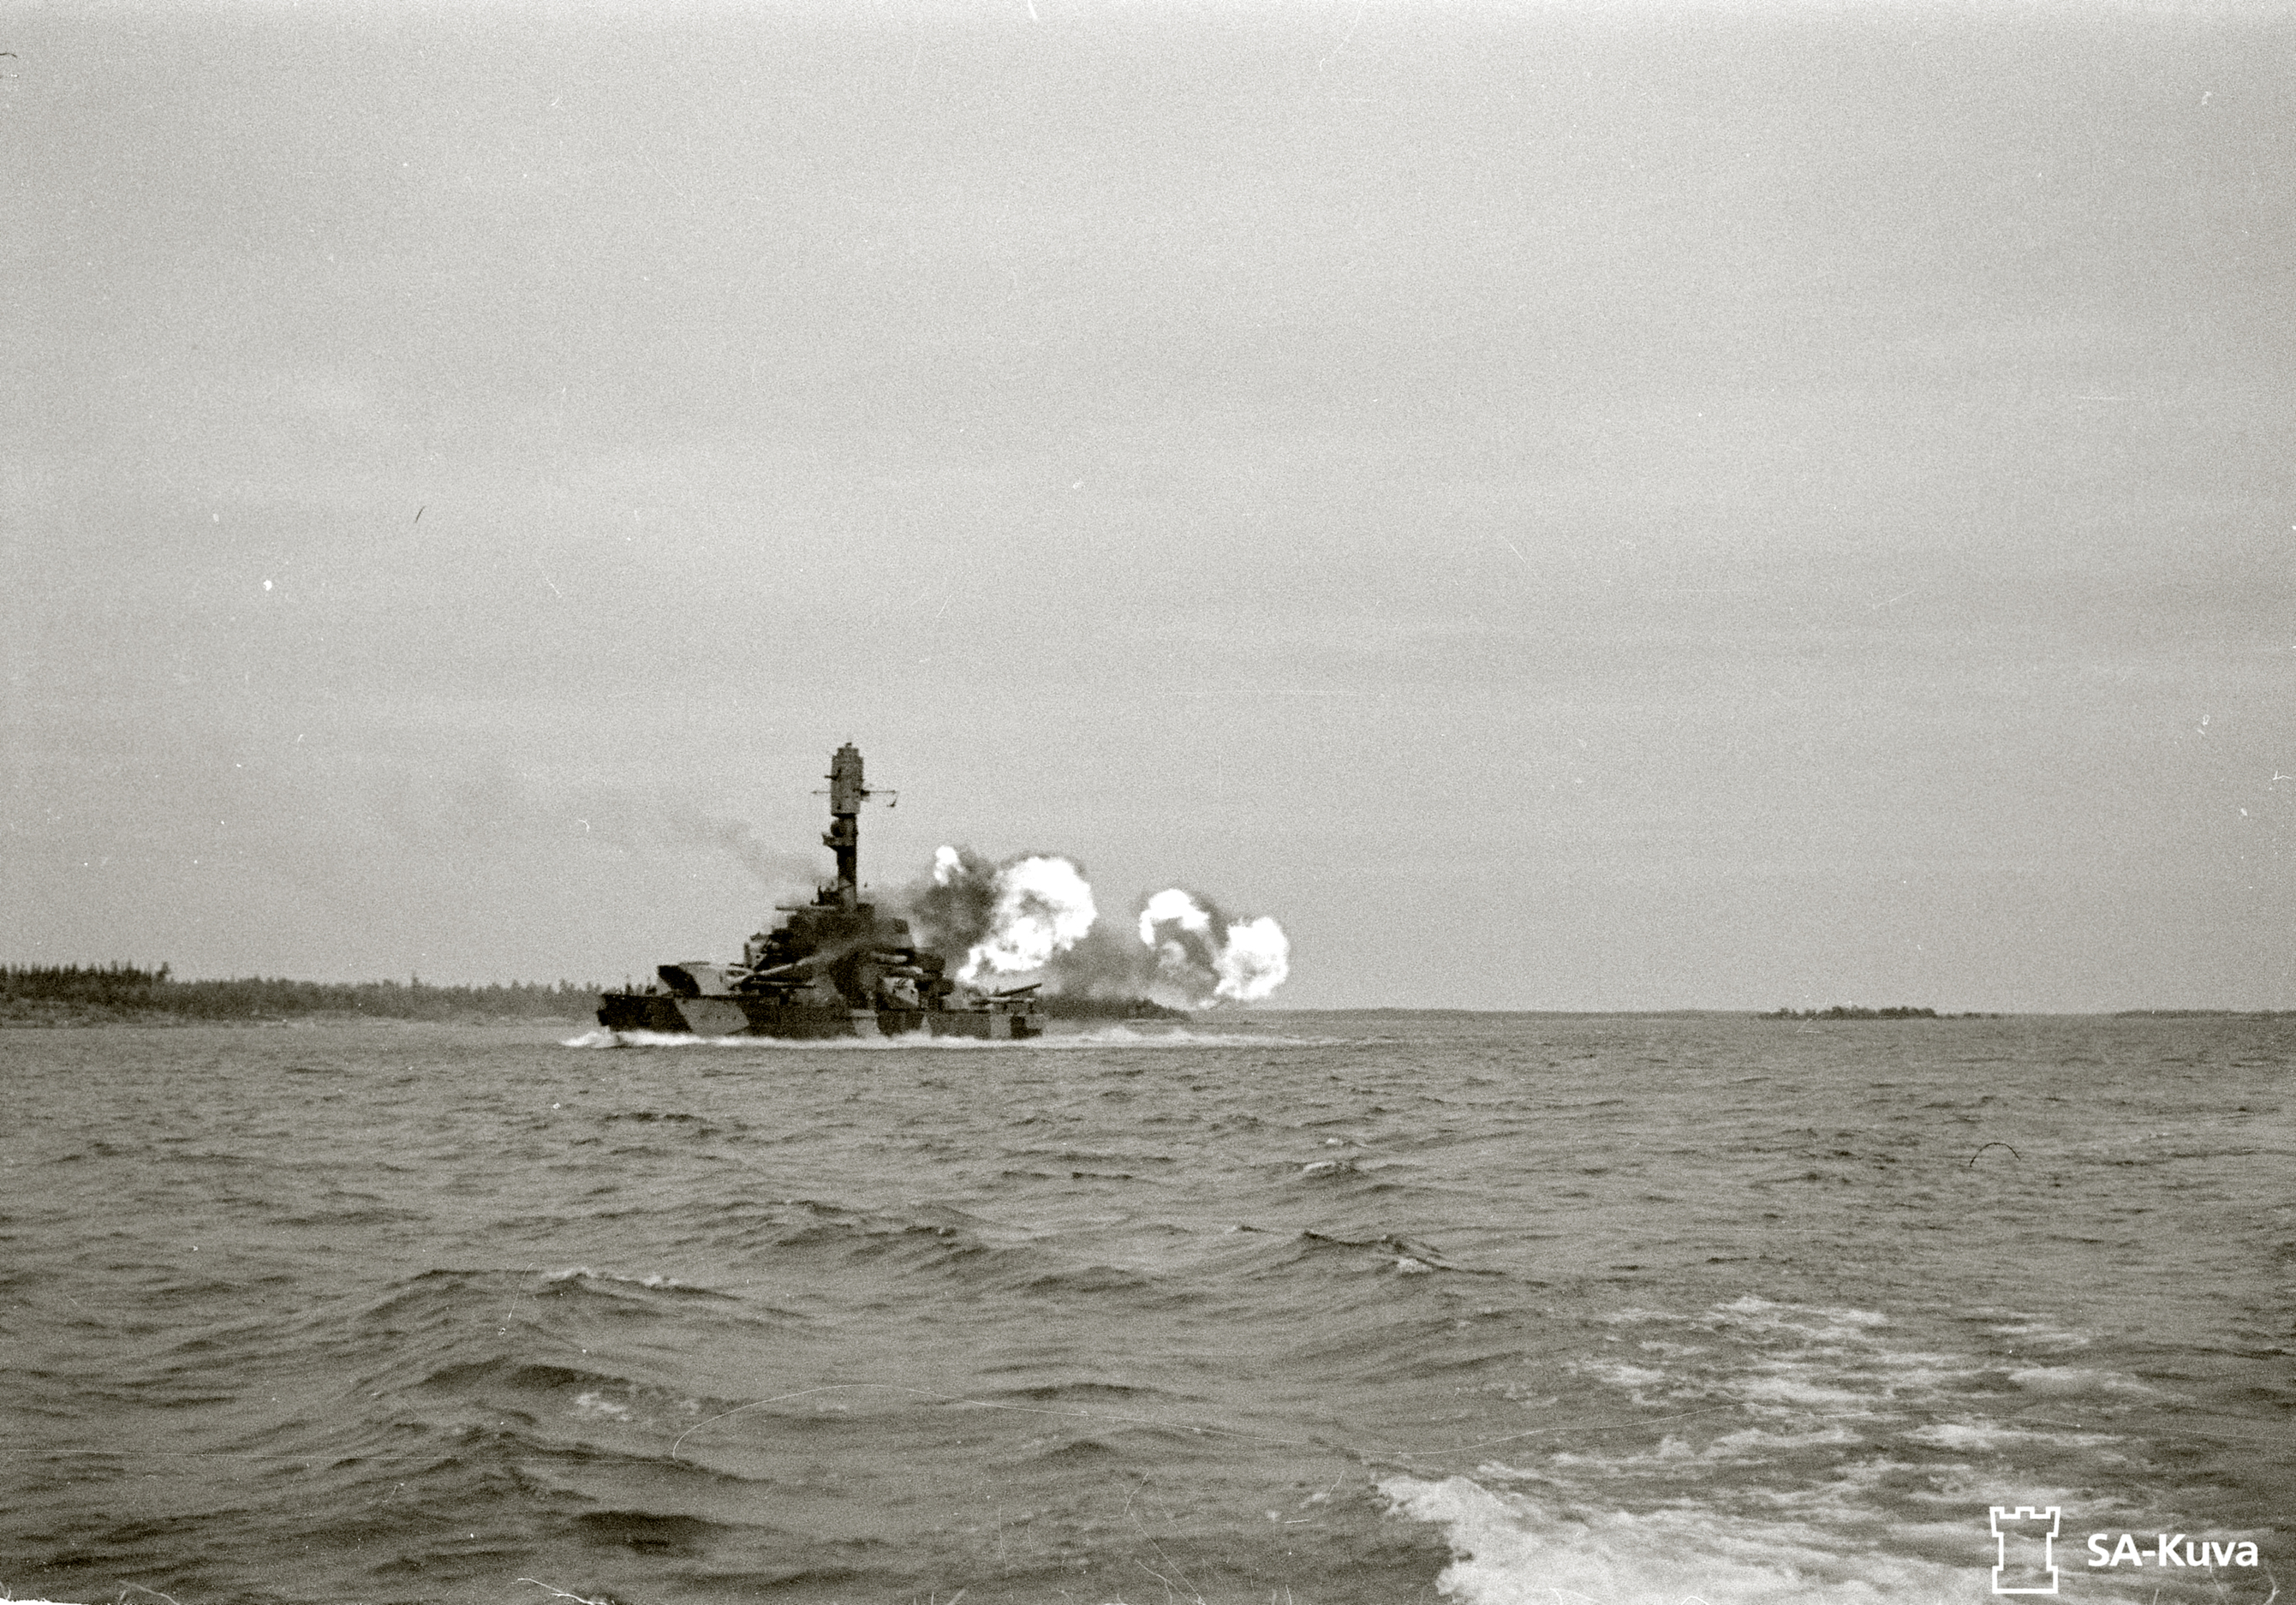 Finnish-Navy-coastal-defence-ship-Vainamoinen-off-the-Finnish-coast-18th-Jun-1942-92291-1-1.jpg